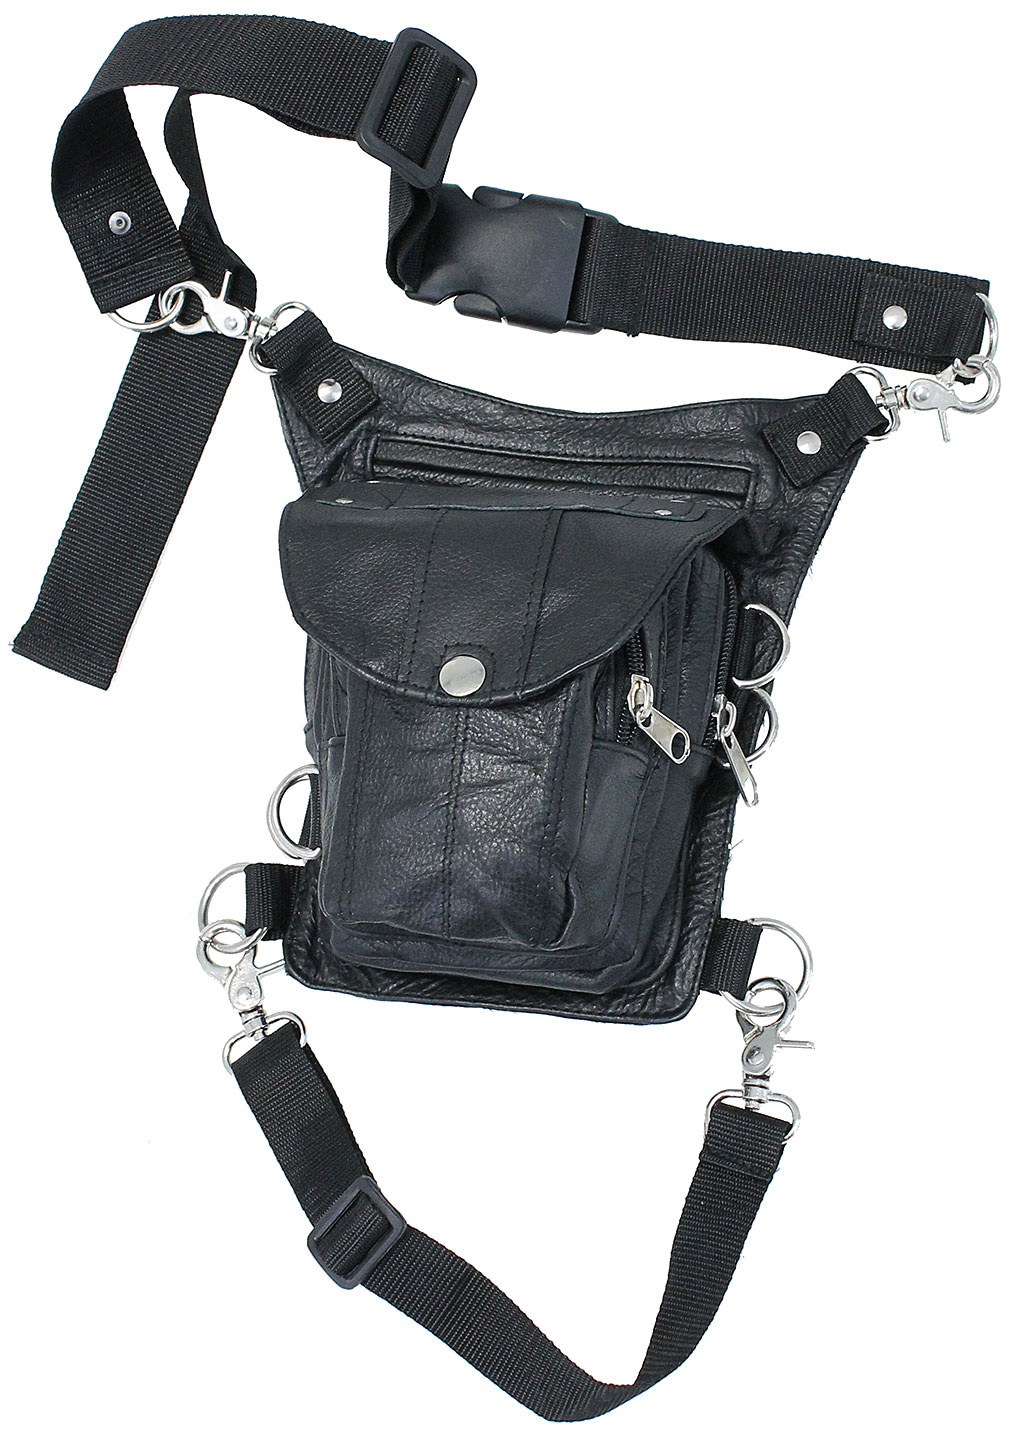 https://cdn.shoplightspeed.com/shops/625505/files/20177540/short-black-leather-thigh-bag-w-small-concealed-po.jpg